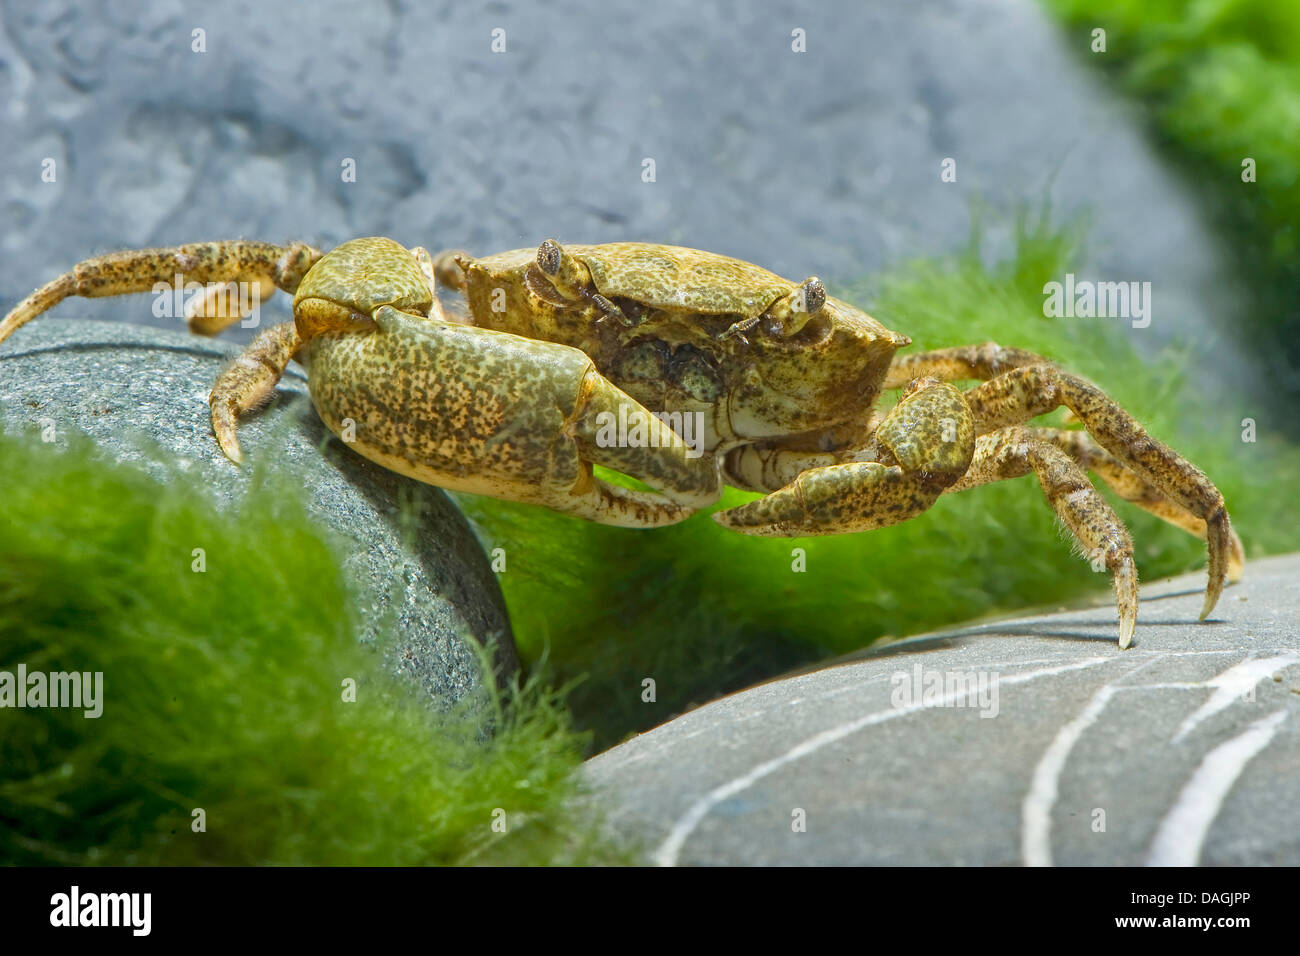 Re del granchio rosso re granchio, Alaskan king crab, Alaskan re pietra granchio (Giapponese granchio, Kamchatka crab, granchio russo) (Paralithodes camtschaticus), nel terrarium Foto Stock